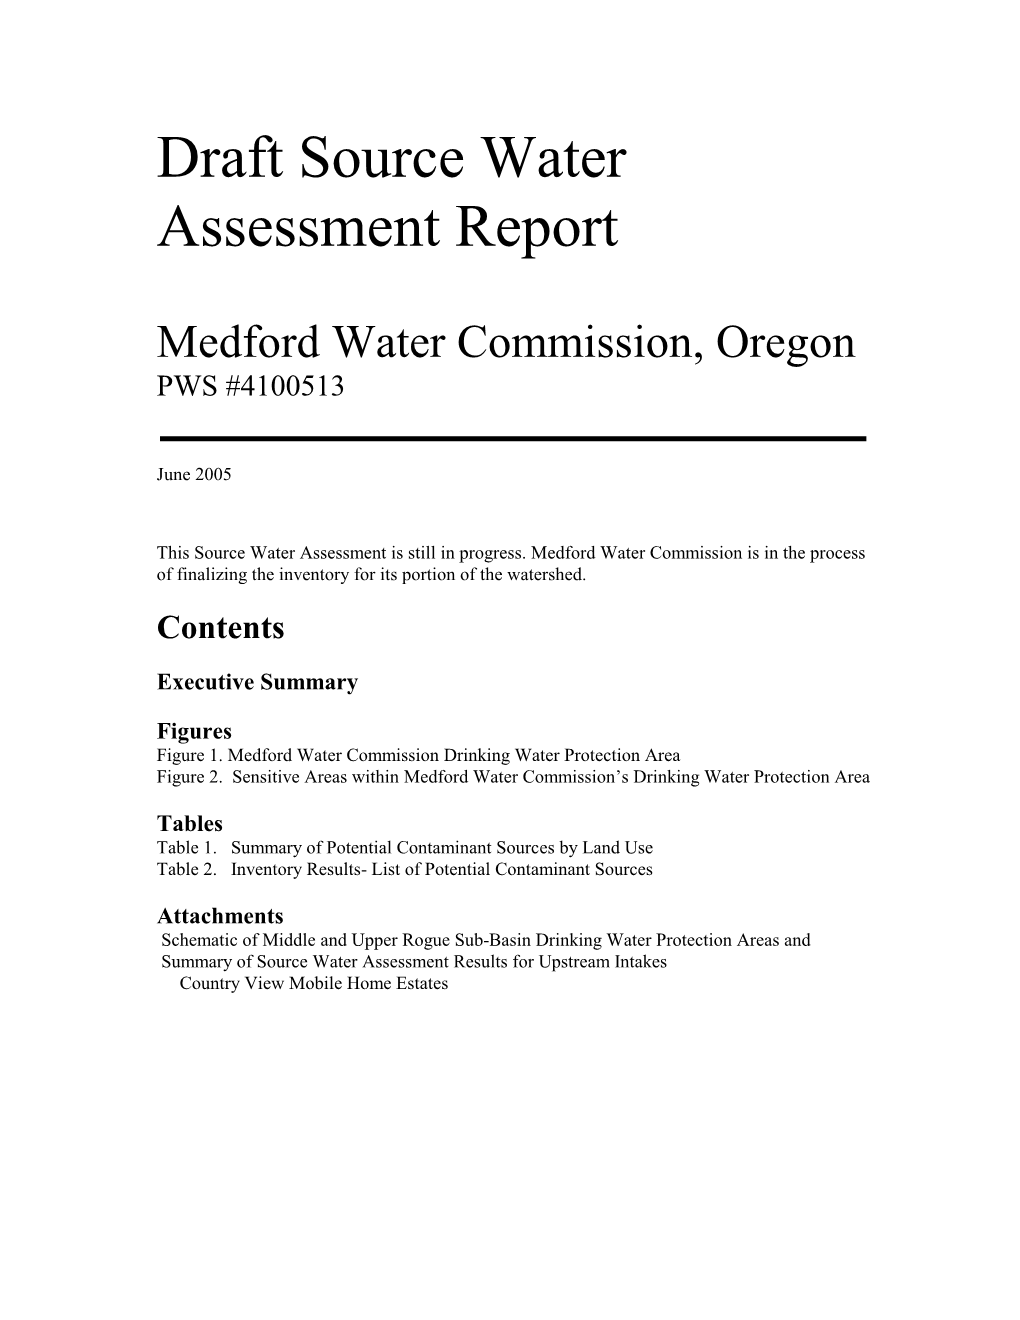 Draft Source Water Assessment Report